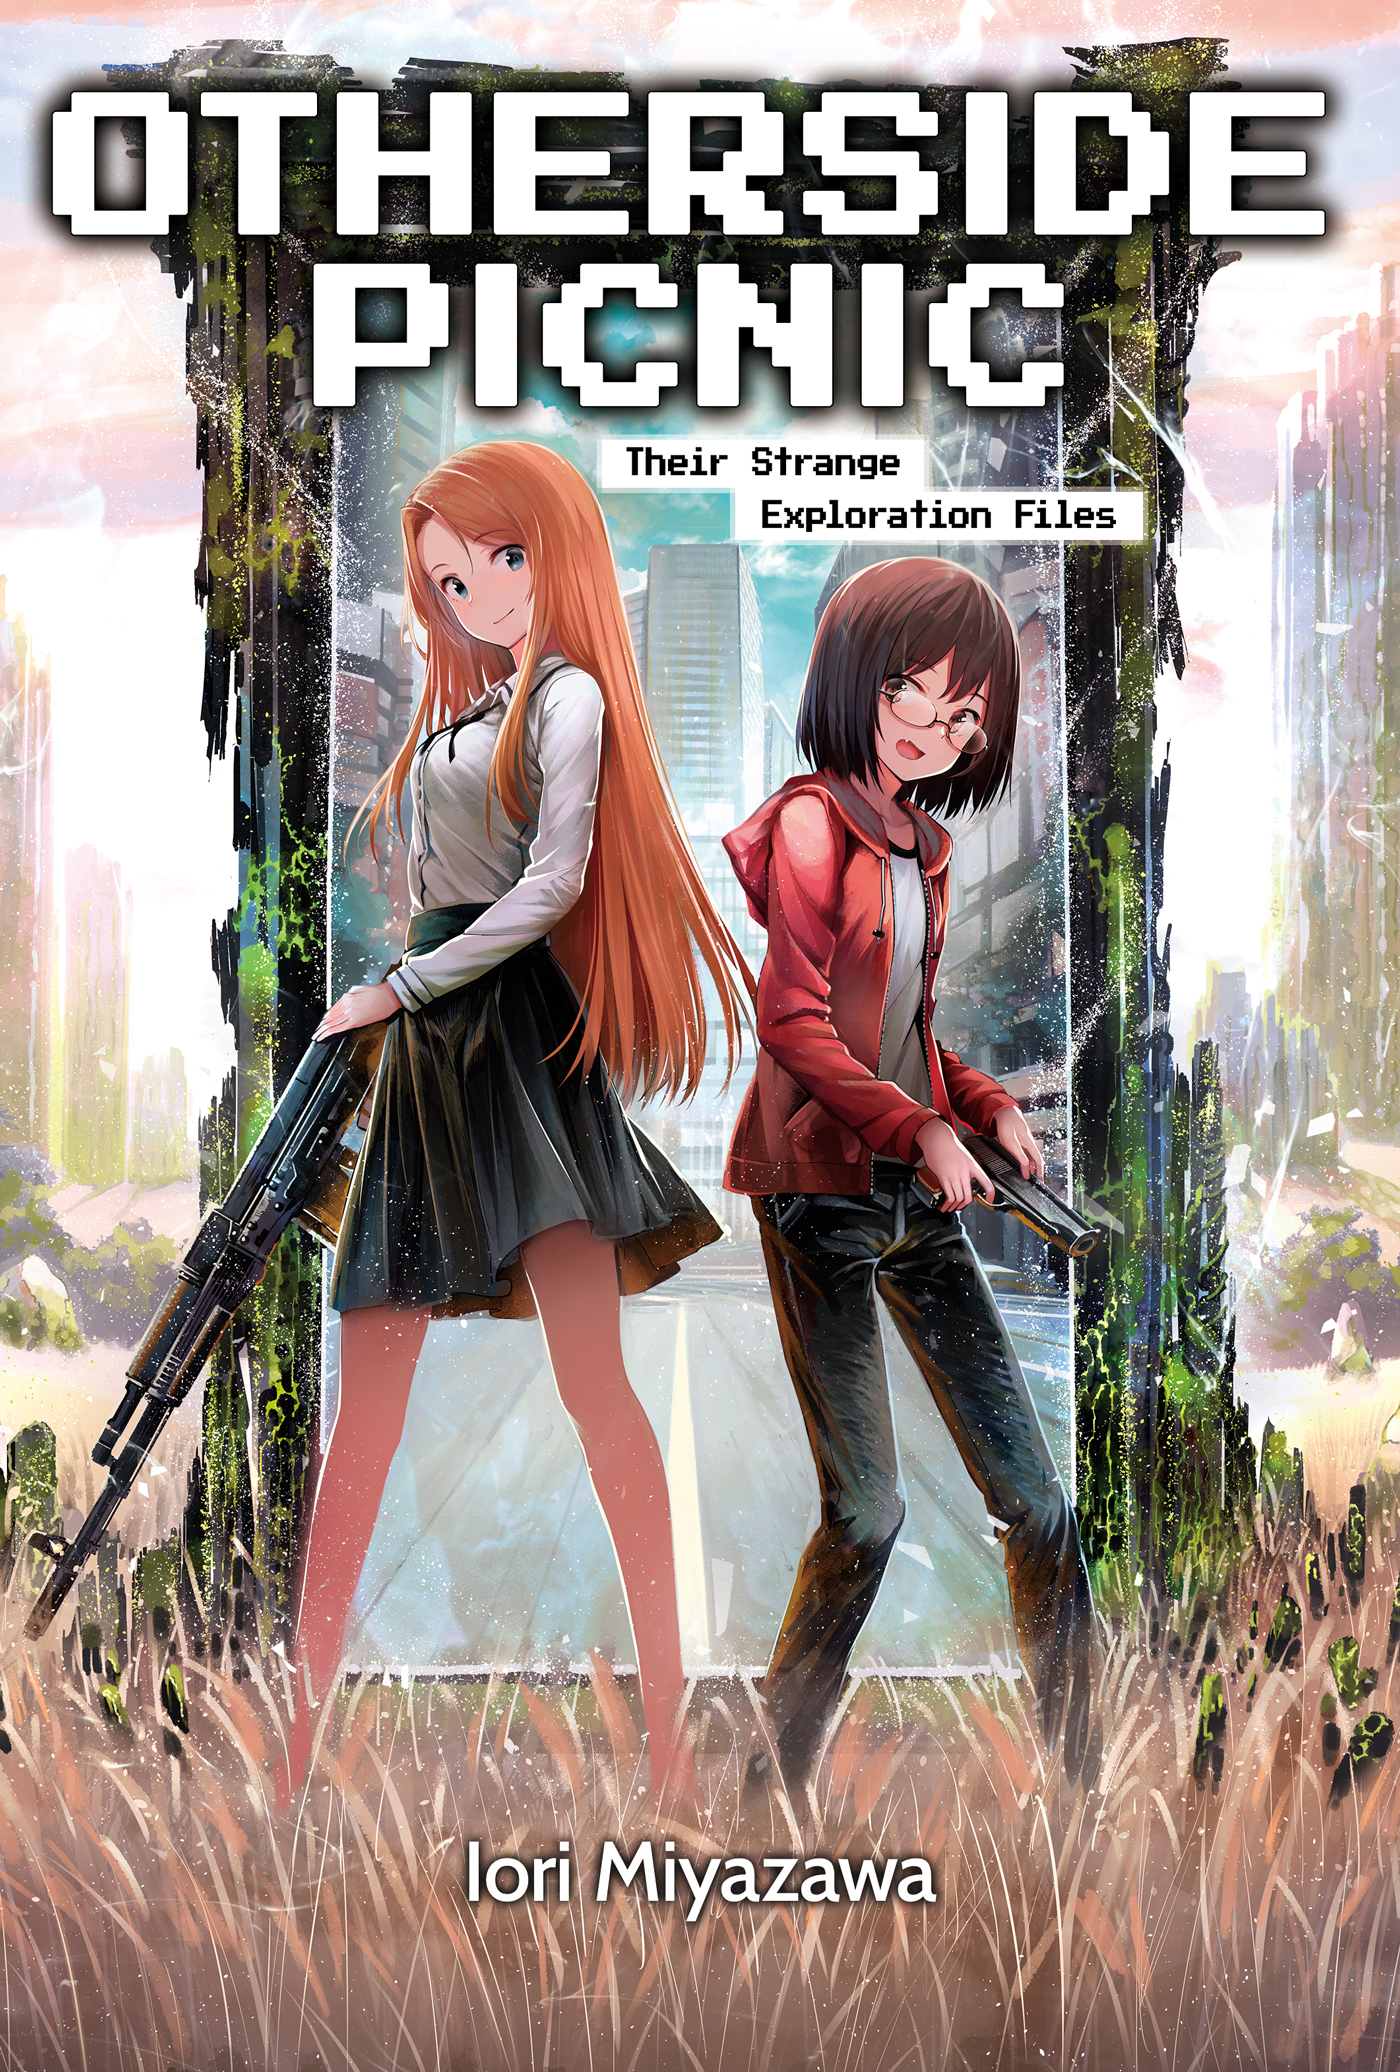 Urasekai Picnic - Volume 5 official cover for manga adaptation of light  novel. Urasekai Picnic (Otherside Picnic) Admin Keitorin - Sama, Anime  Live Network